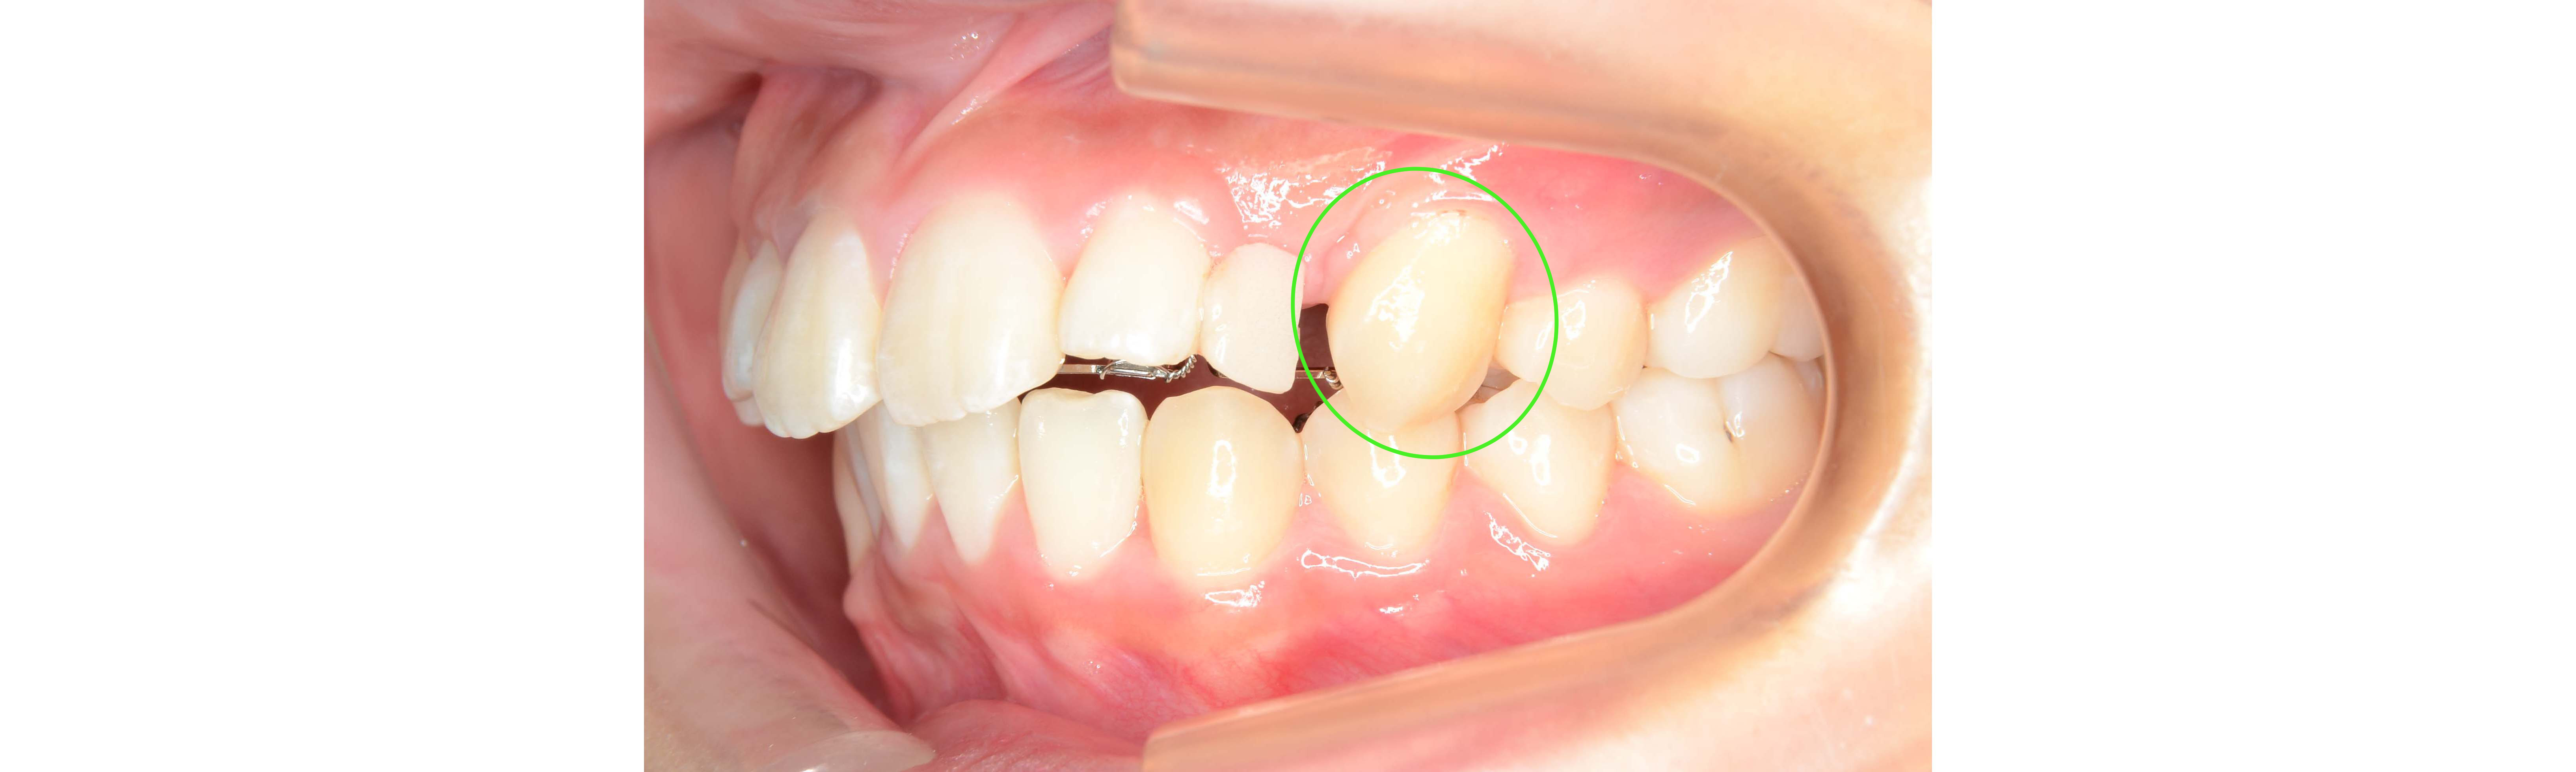 歯の萌出位置異常、埋伏歯、過剰歯の治療